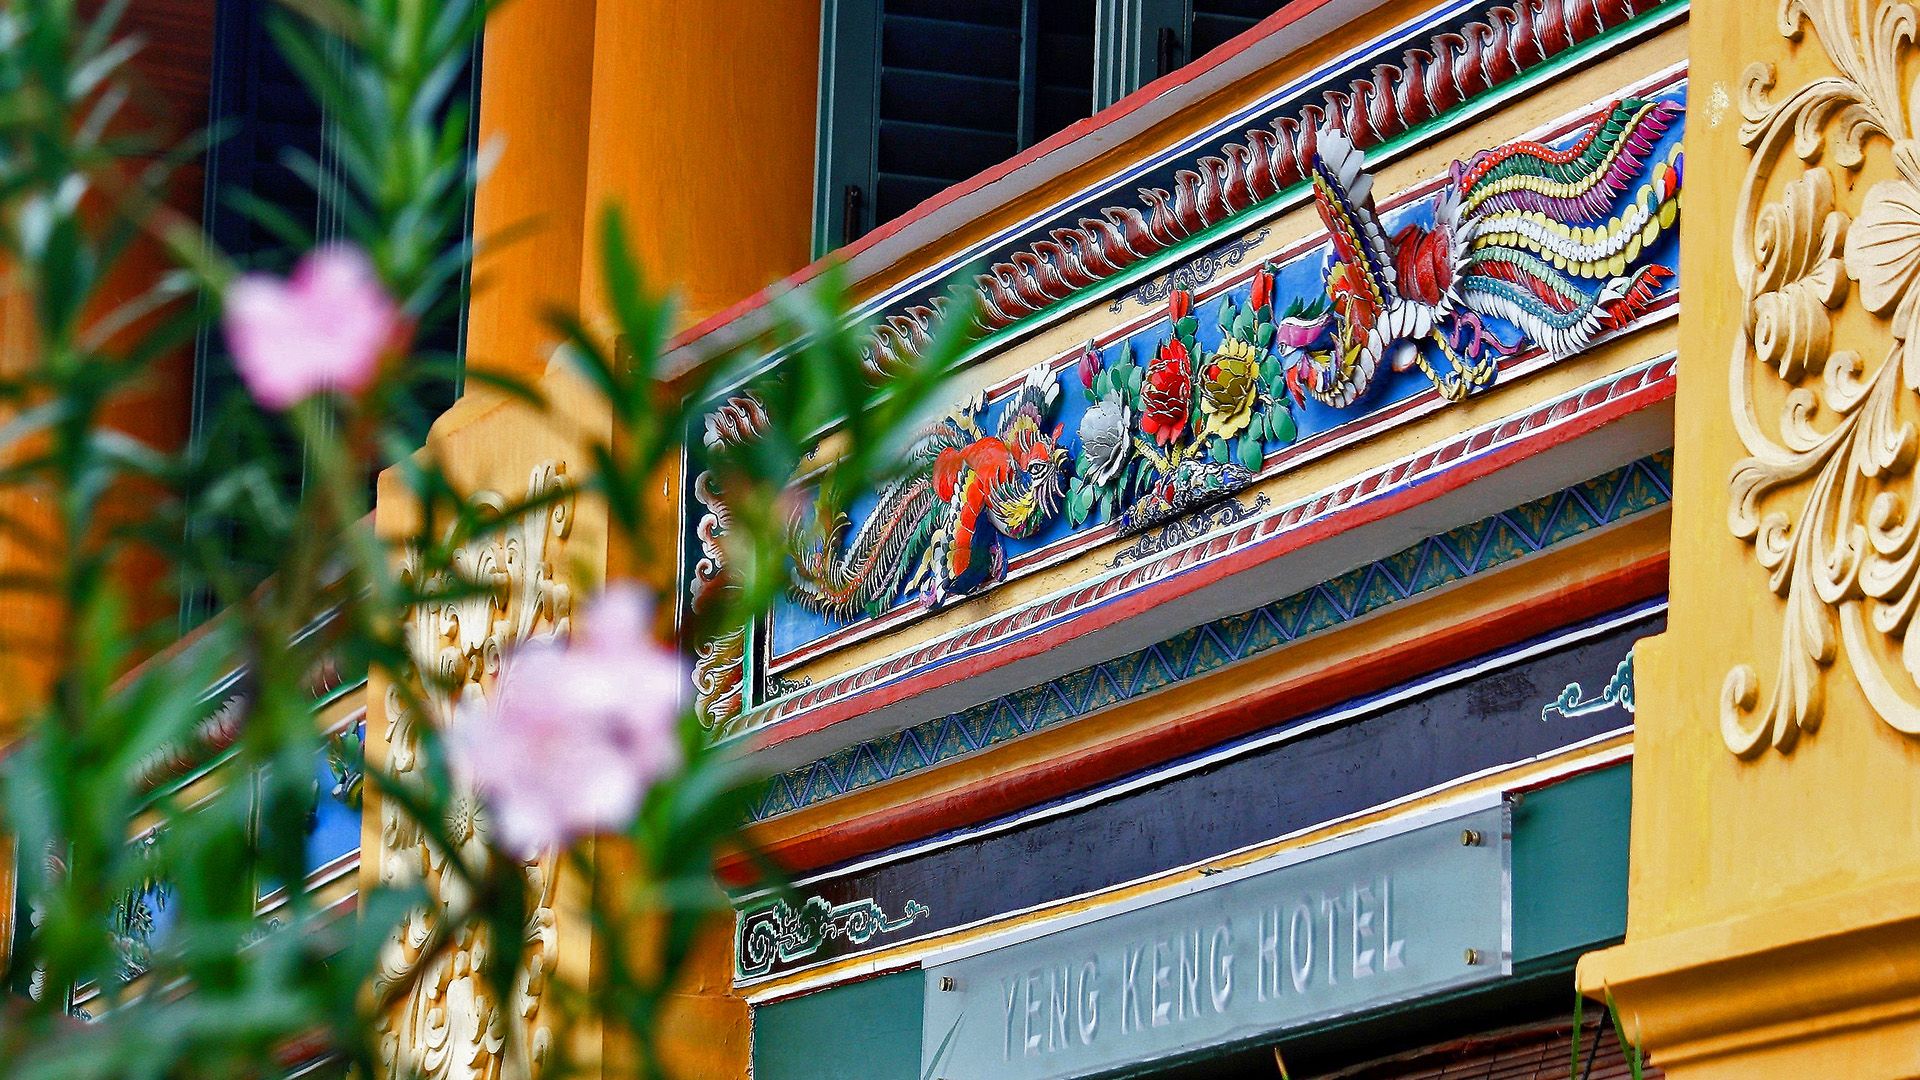 Yeng Keng Hotel in World Heritage City of Georgetown, Penang, Malaysia